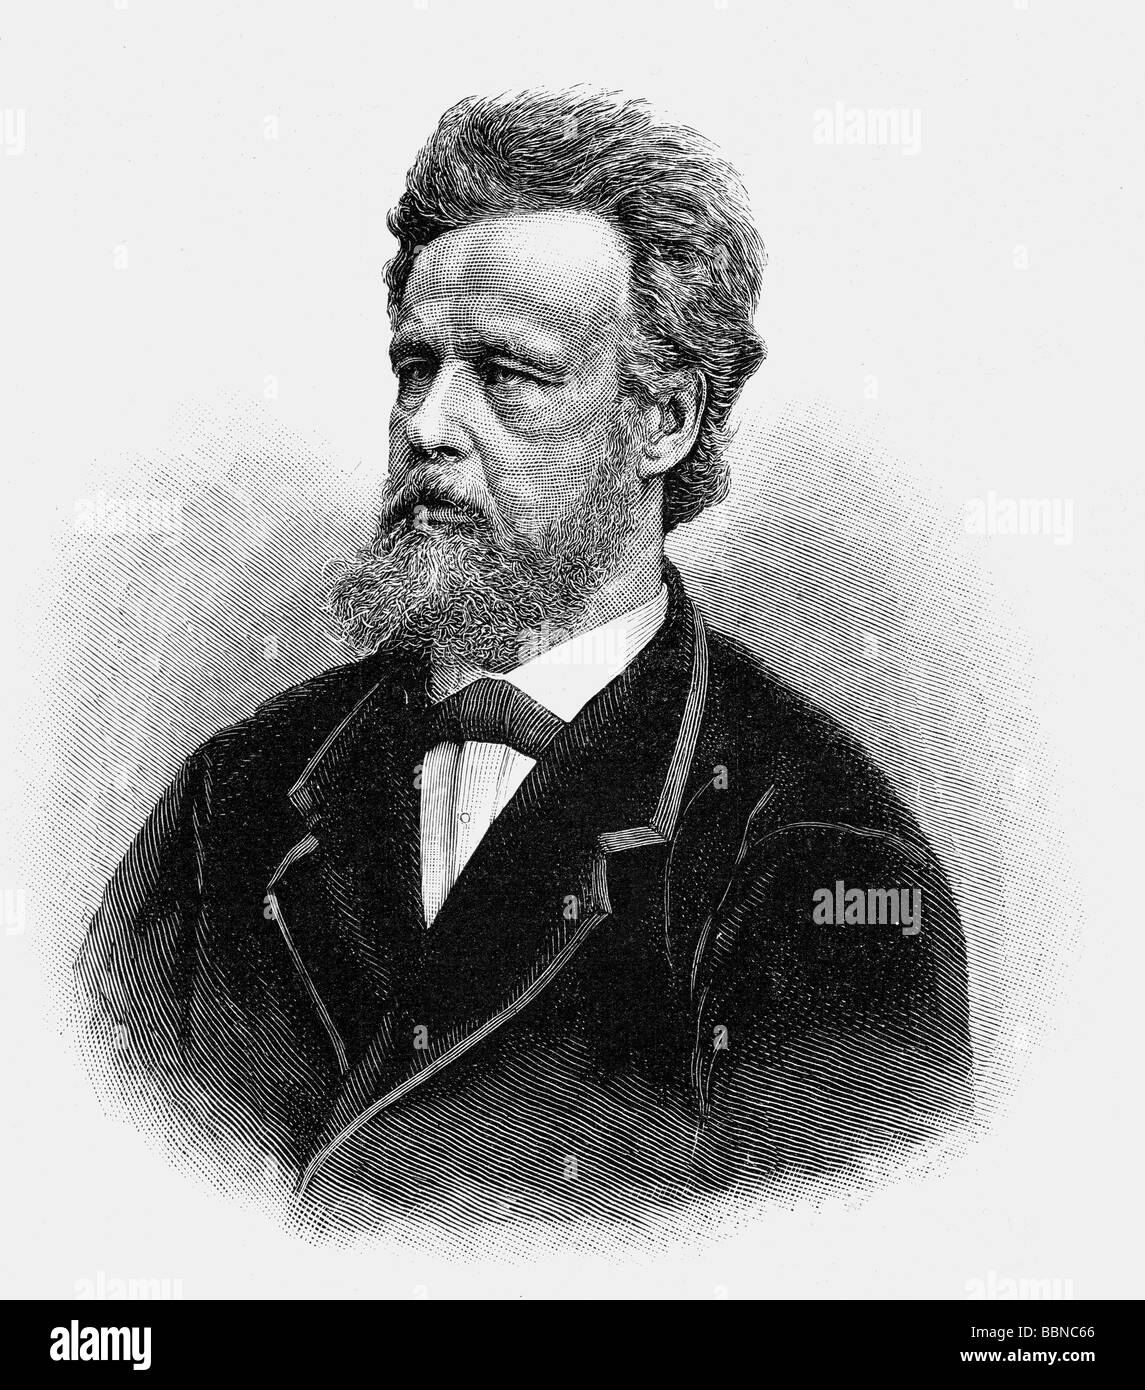 Kapp, Friedrich, 13.4.1824 - 27.10.1884, German politician and historian, portrait, wood engraving, 19th century, Stock Photo